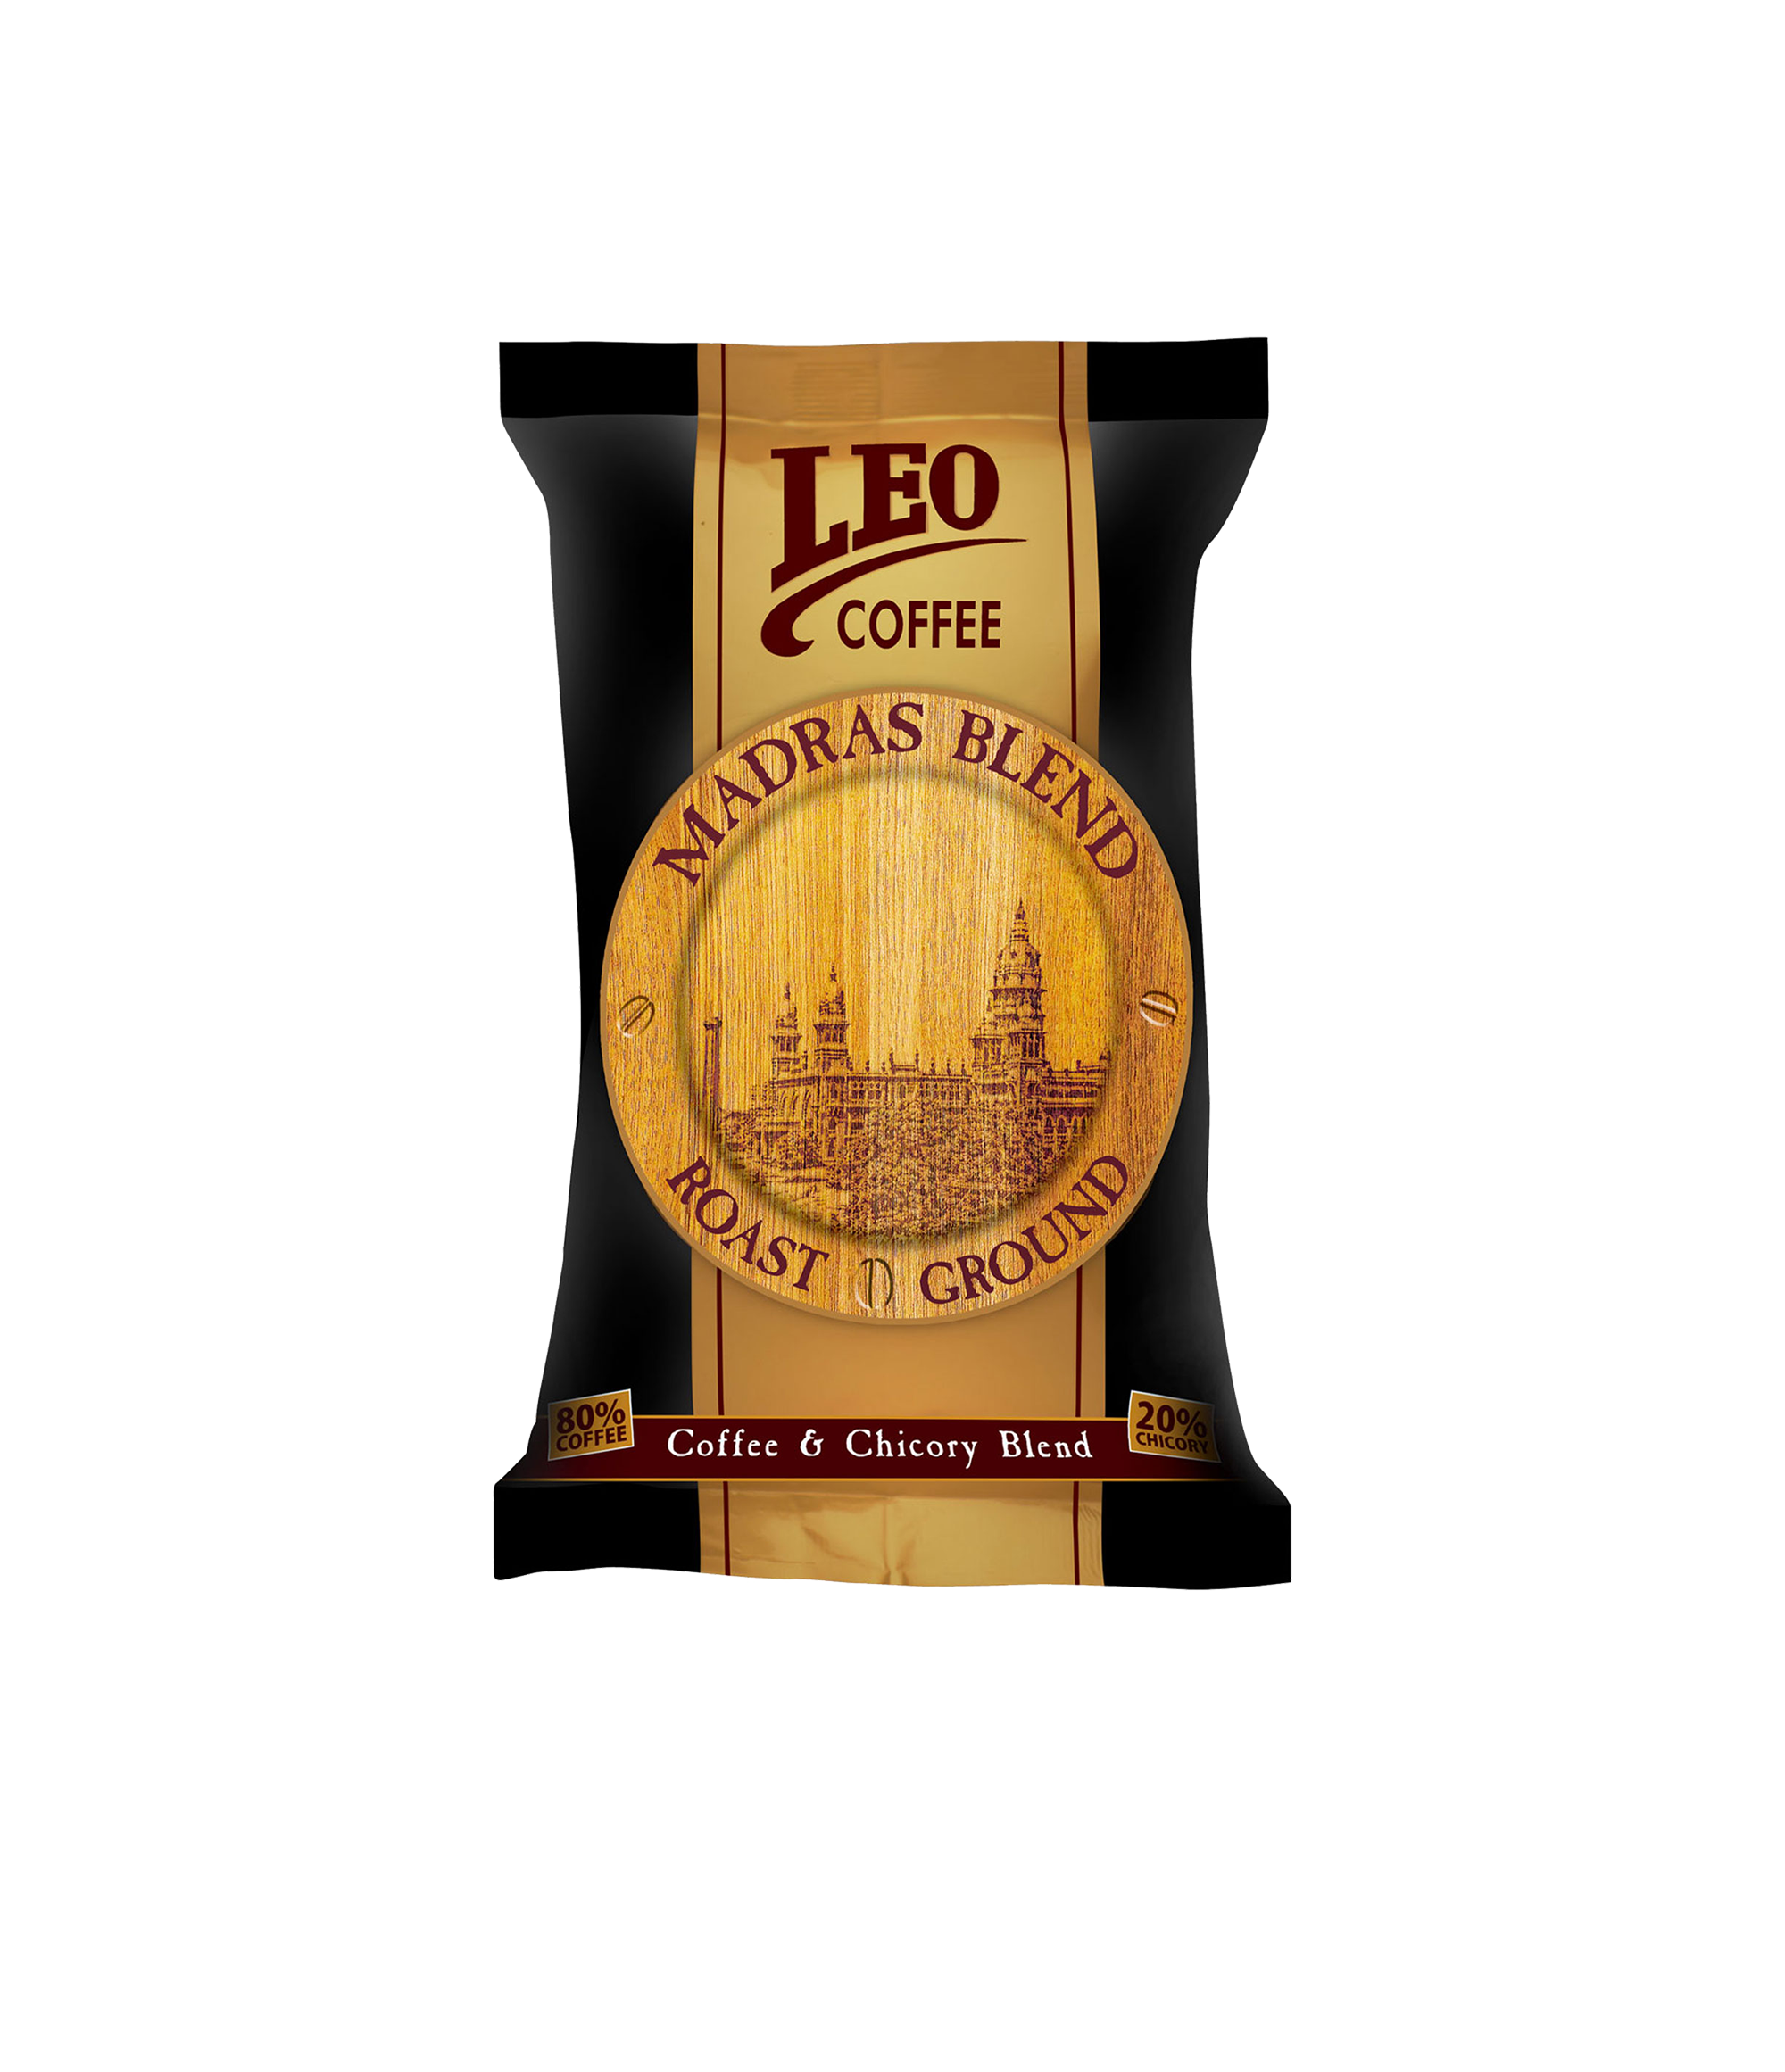 Leo Coffee India - Madras Blend 80:20 product image